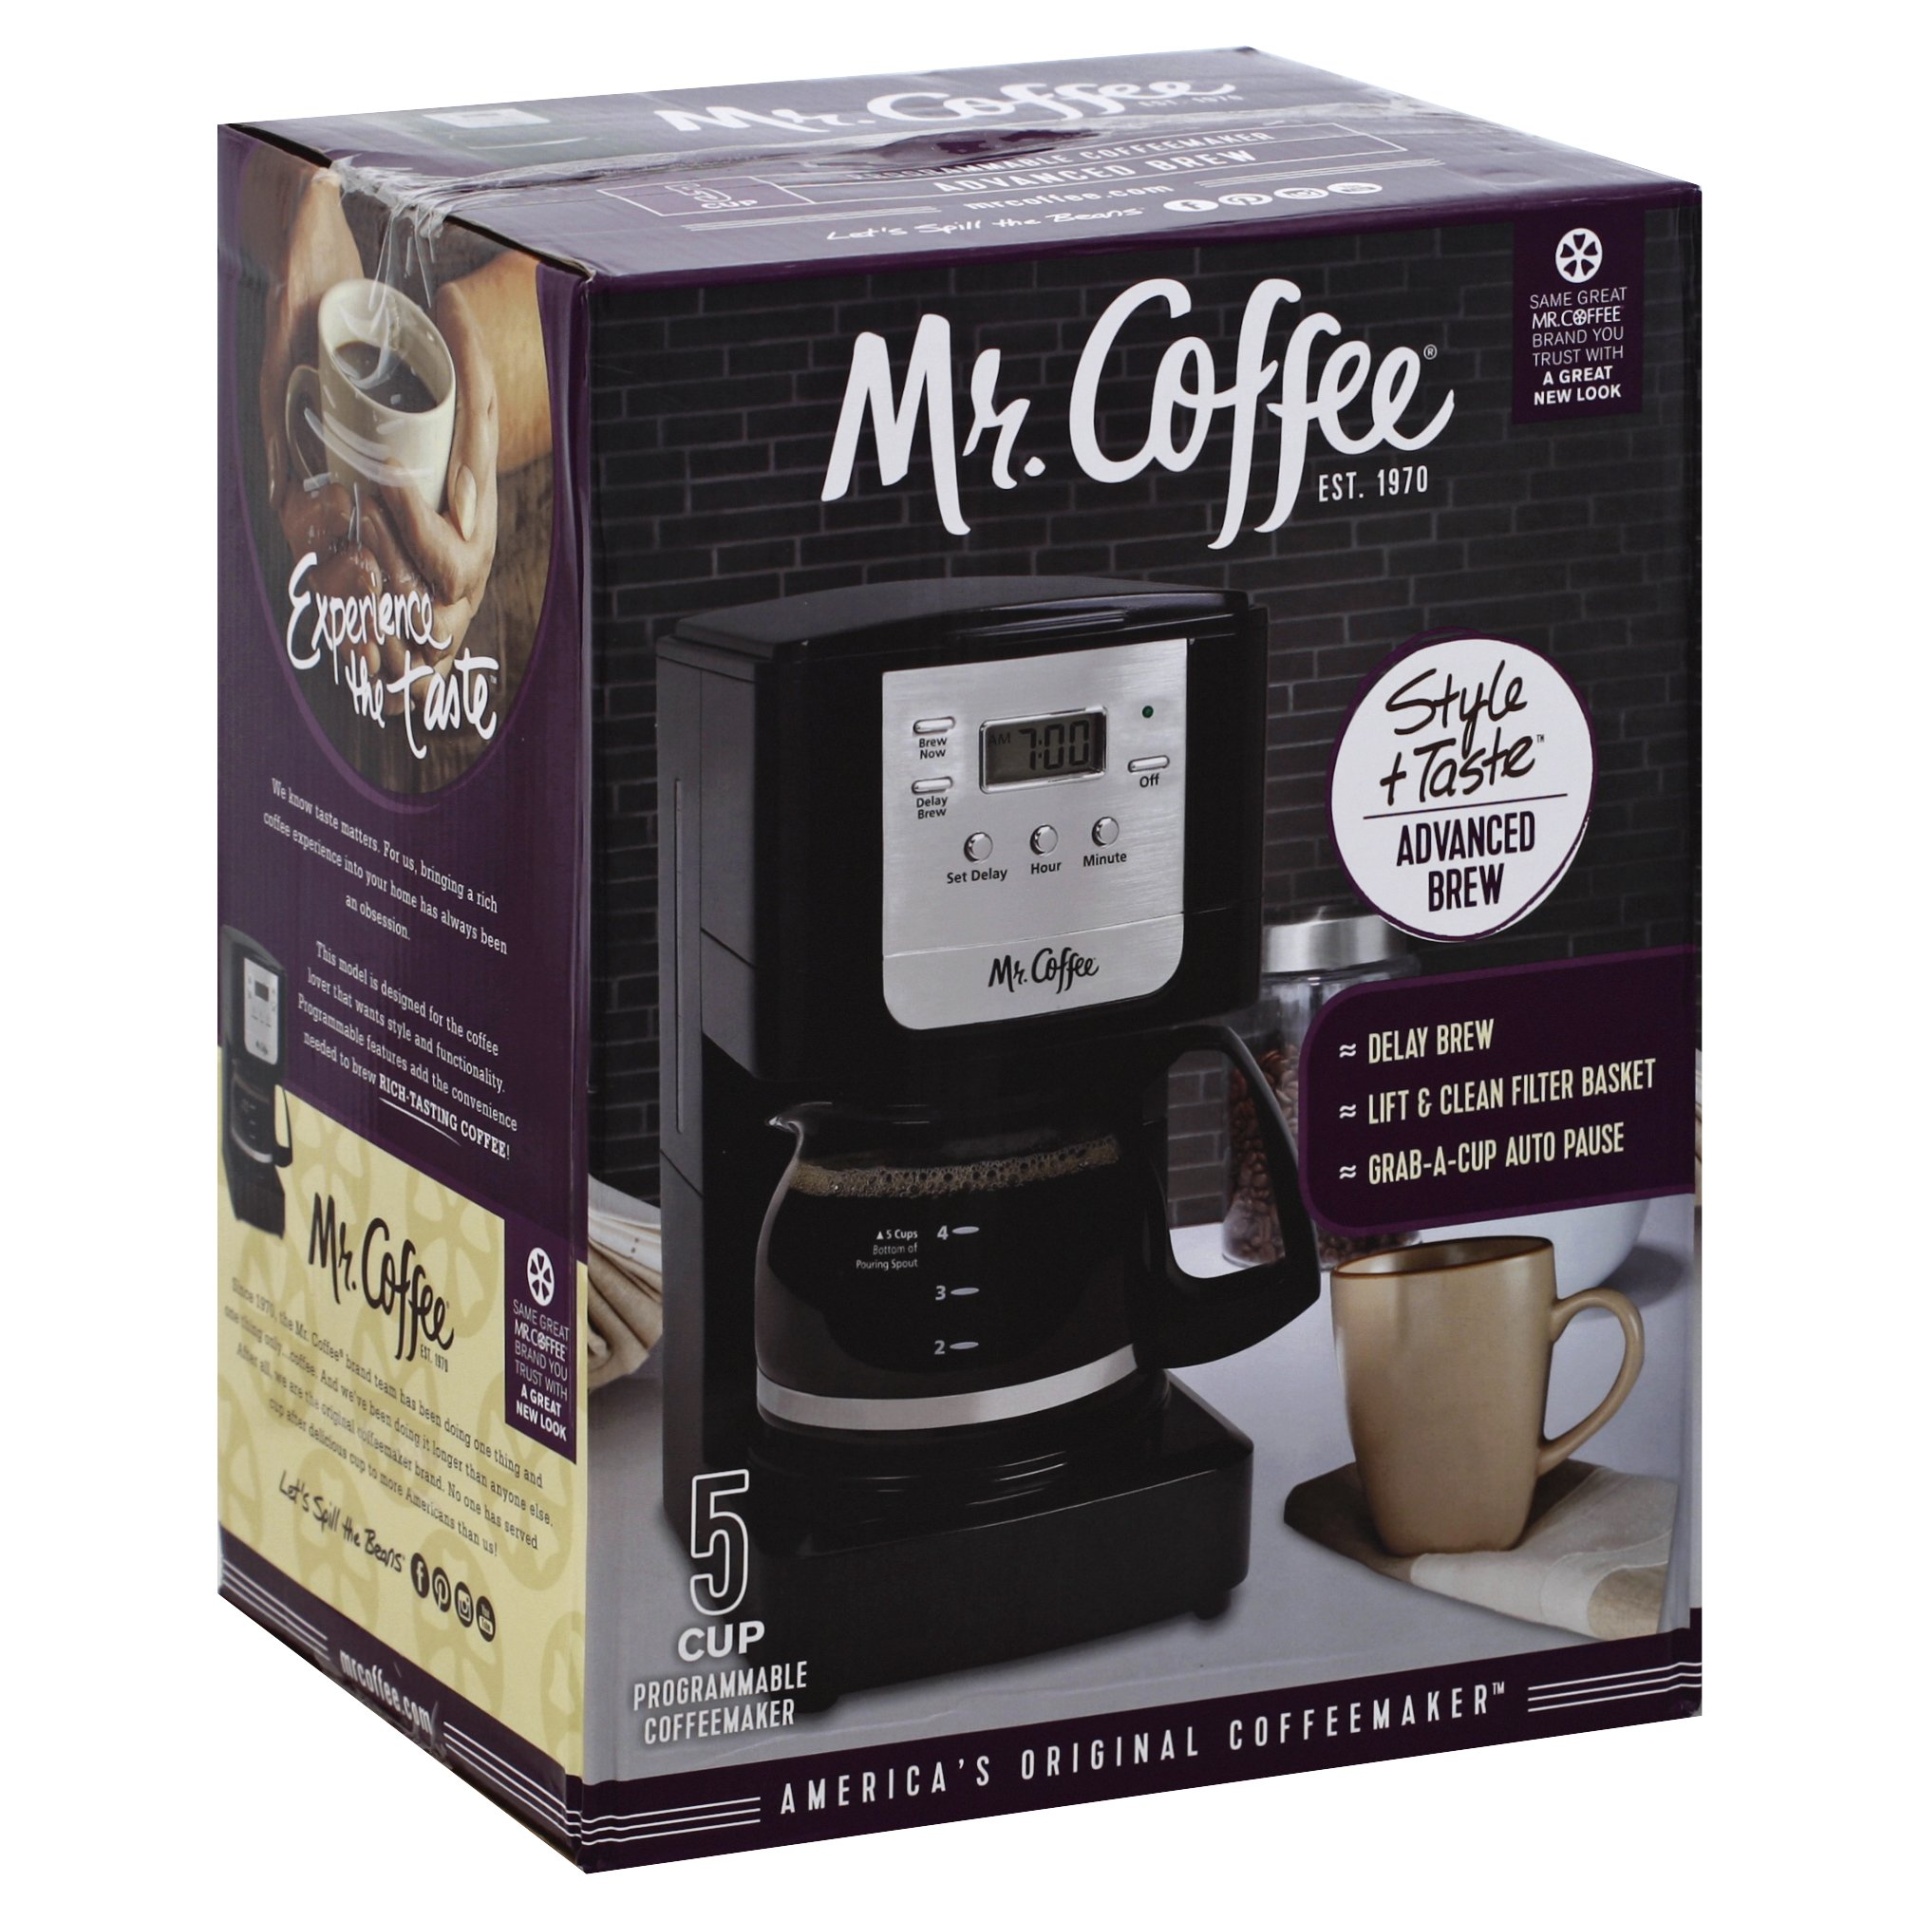 Mr. Coffee Advanced Brew Coffee Maker Black (JWX3) 5 cup